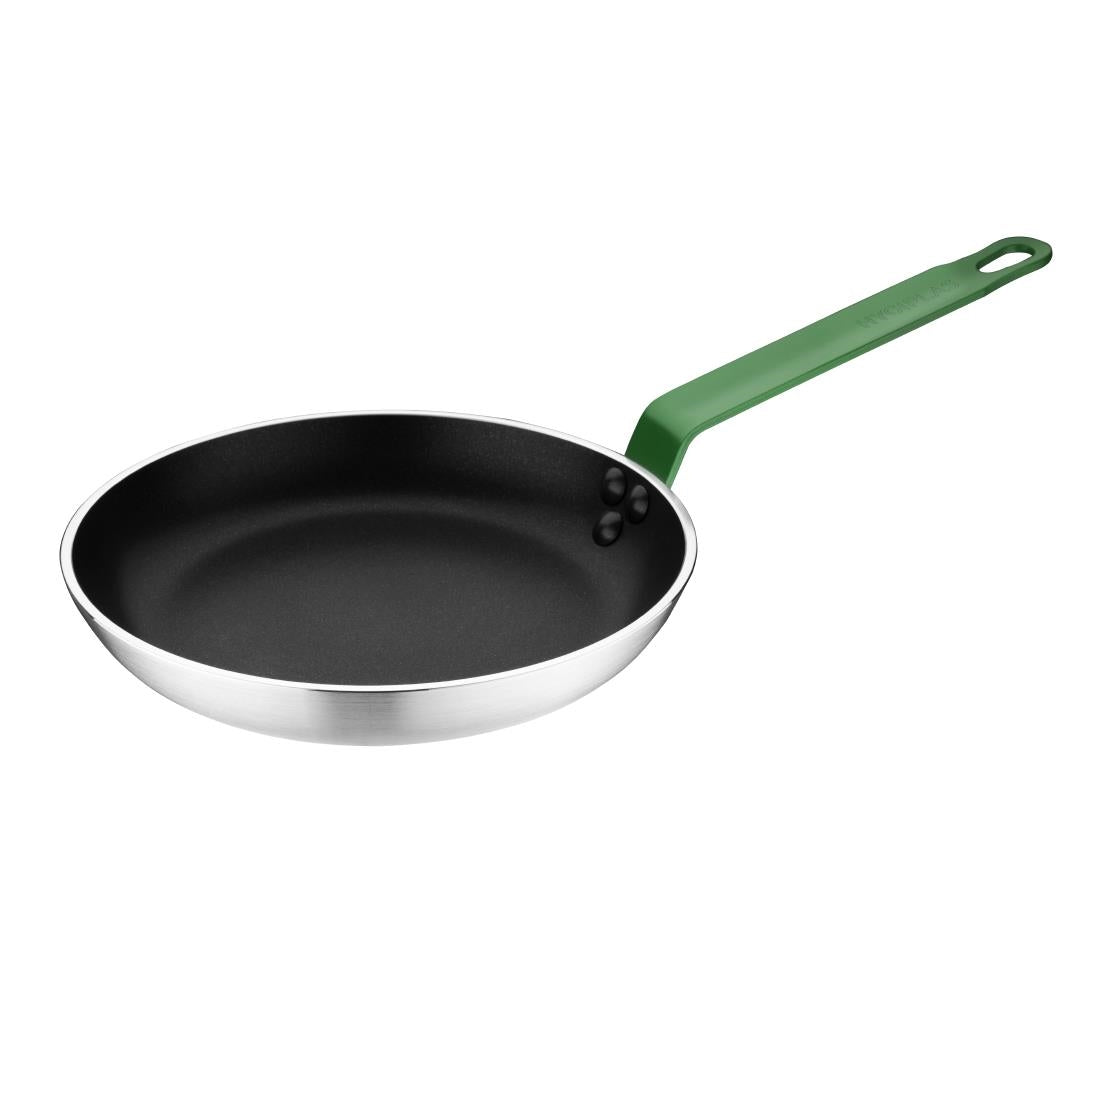 Hygiplas Aluminium Non-Stick Teflon Platinum Plus Frying Pan with Green Handle 24cm